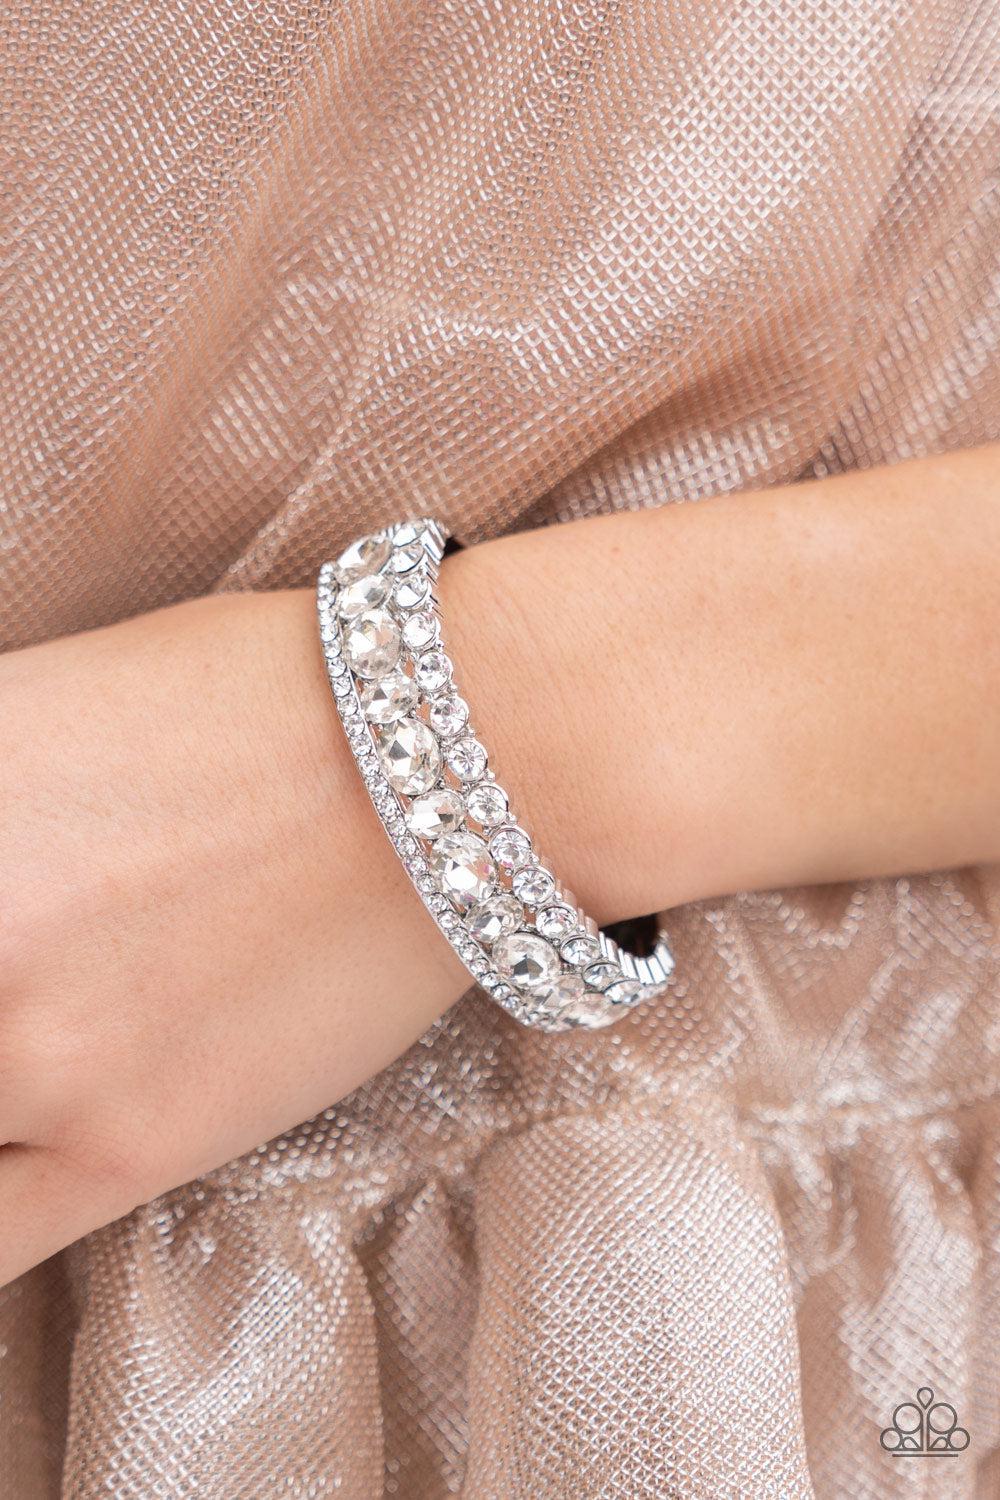 Mega Megawatt White Rhinestone Bracelet - Paparazzi Accessories- lightbox - CarasShop.com - $5 Jewelry by Cara Jewels